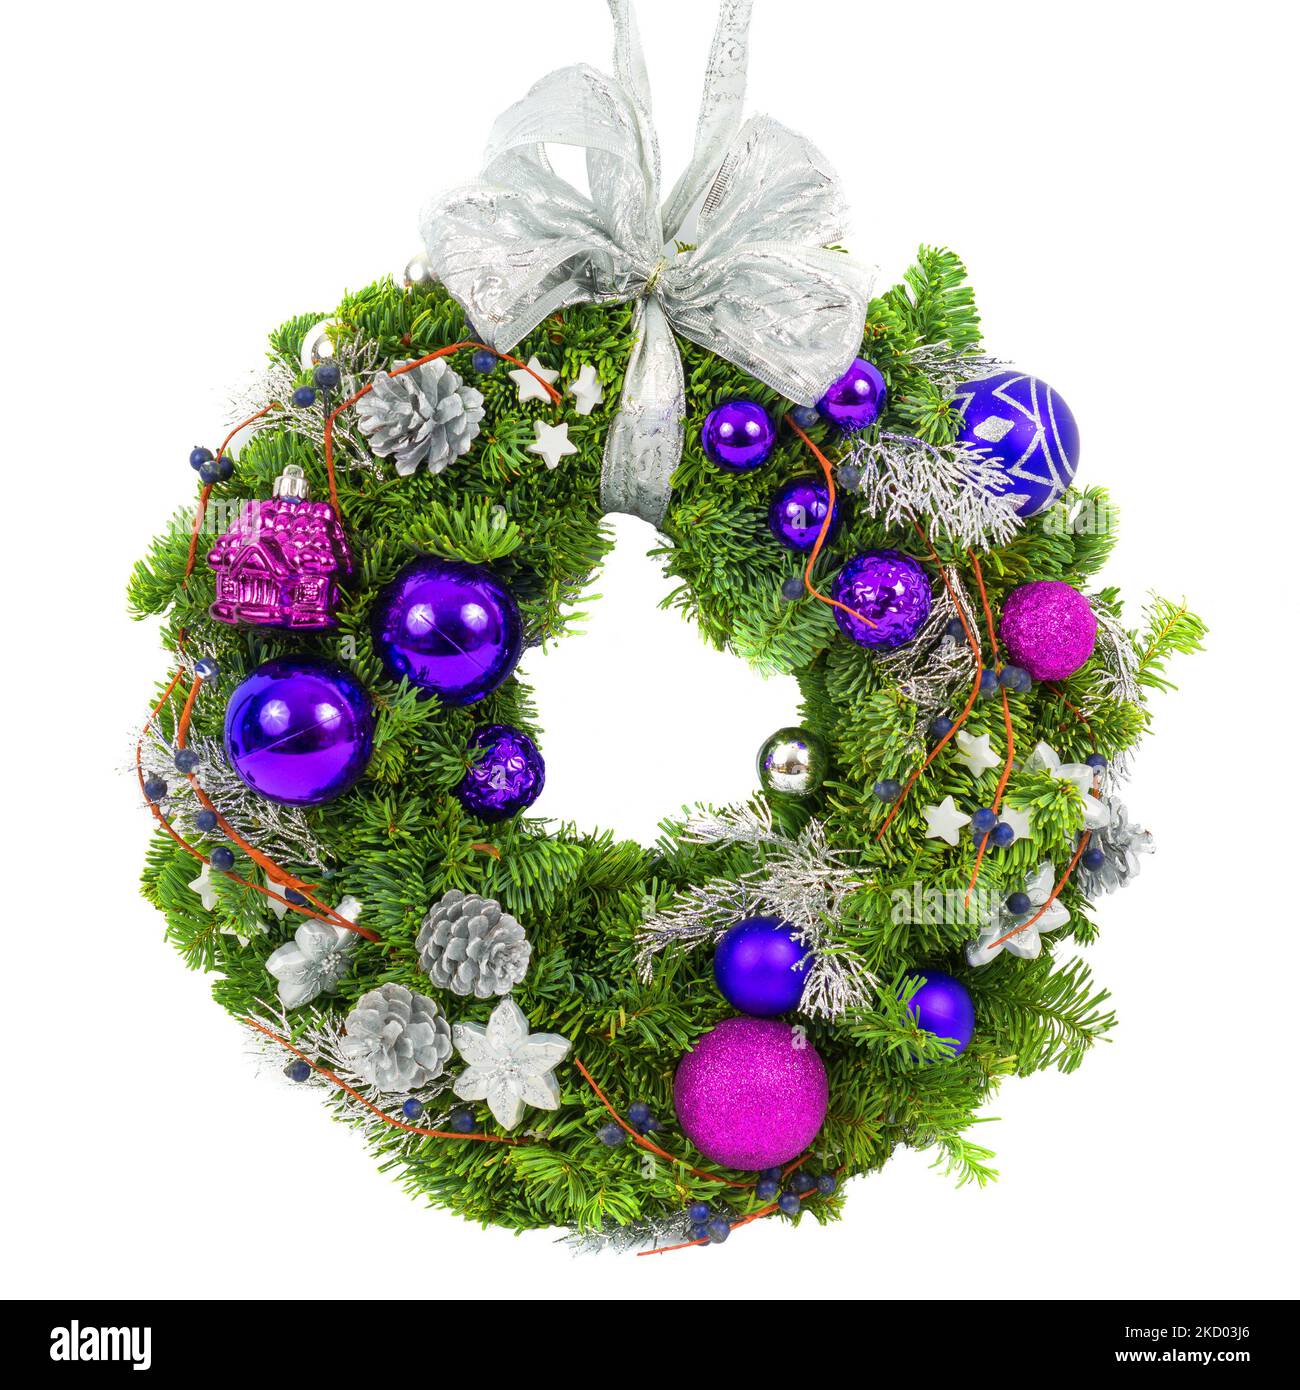 Corona de navidad natural fotografías e imágenes de alta resolución - Alamy